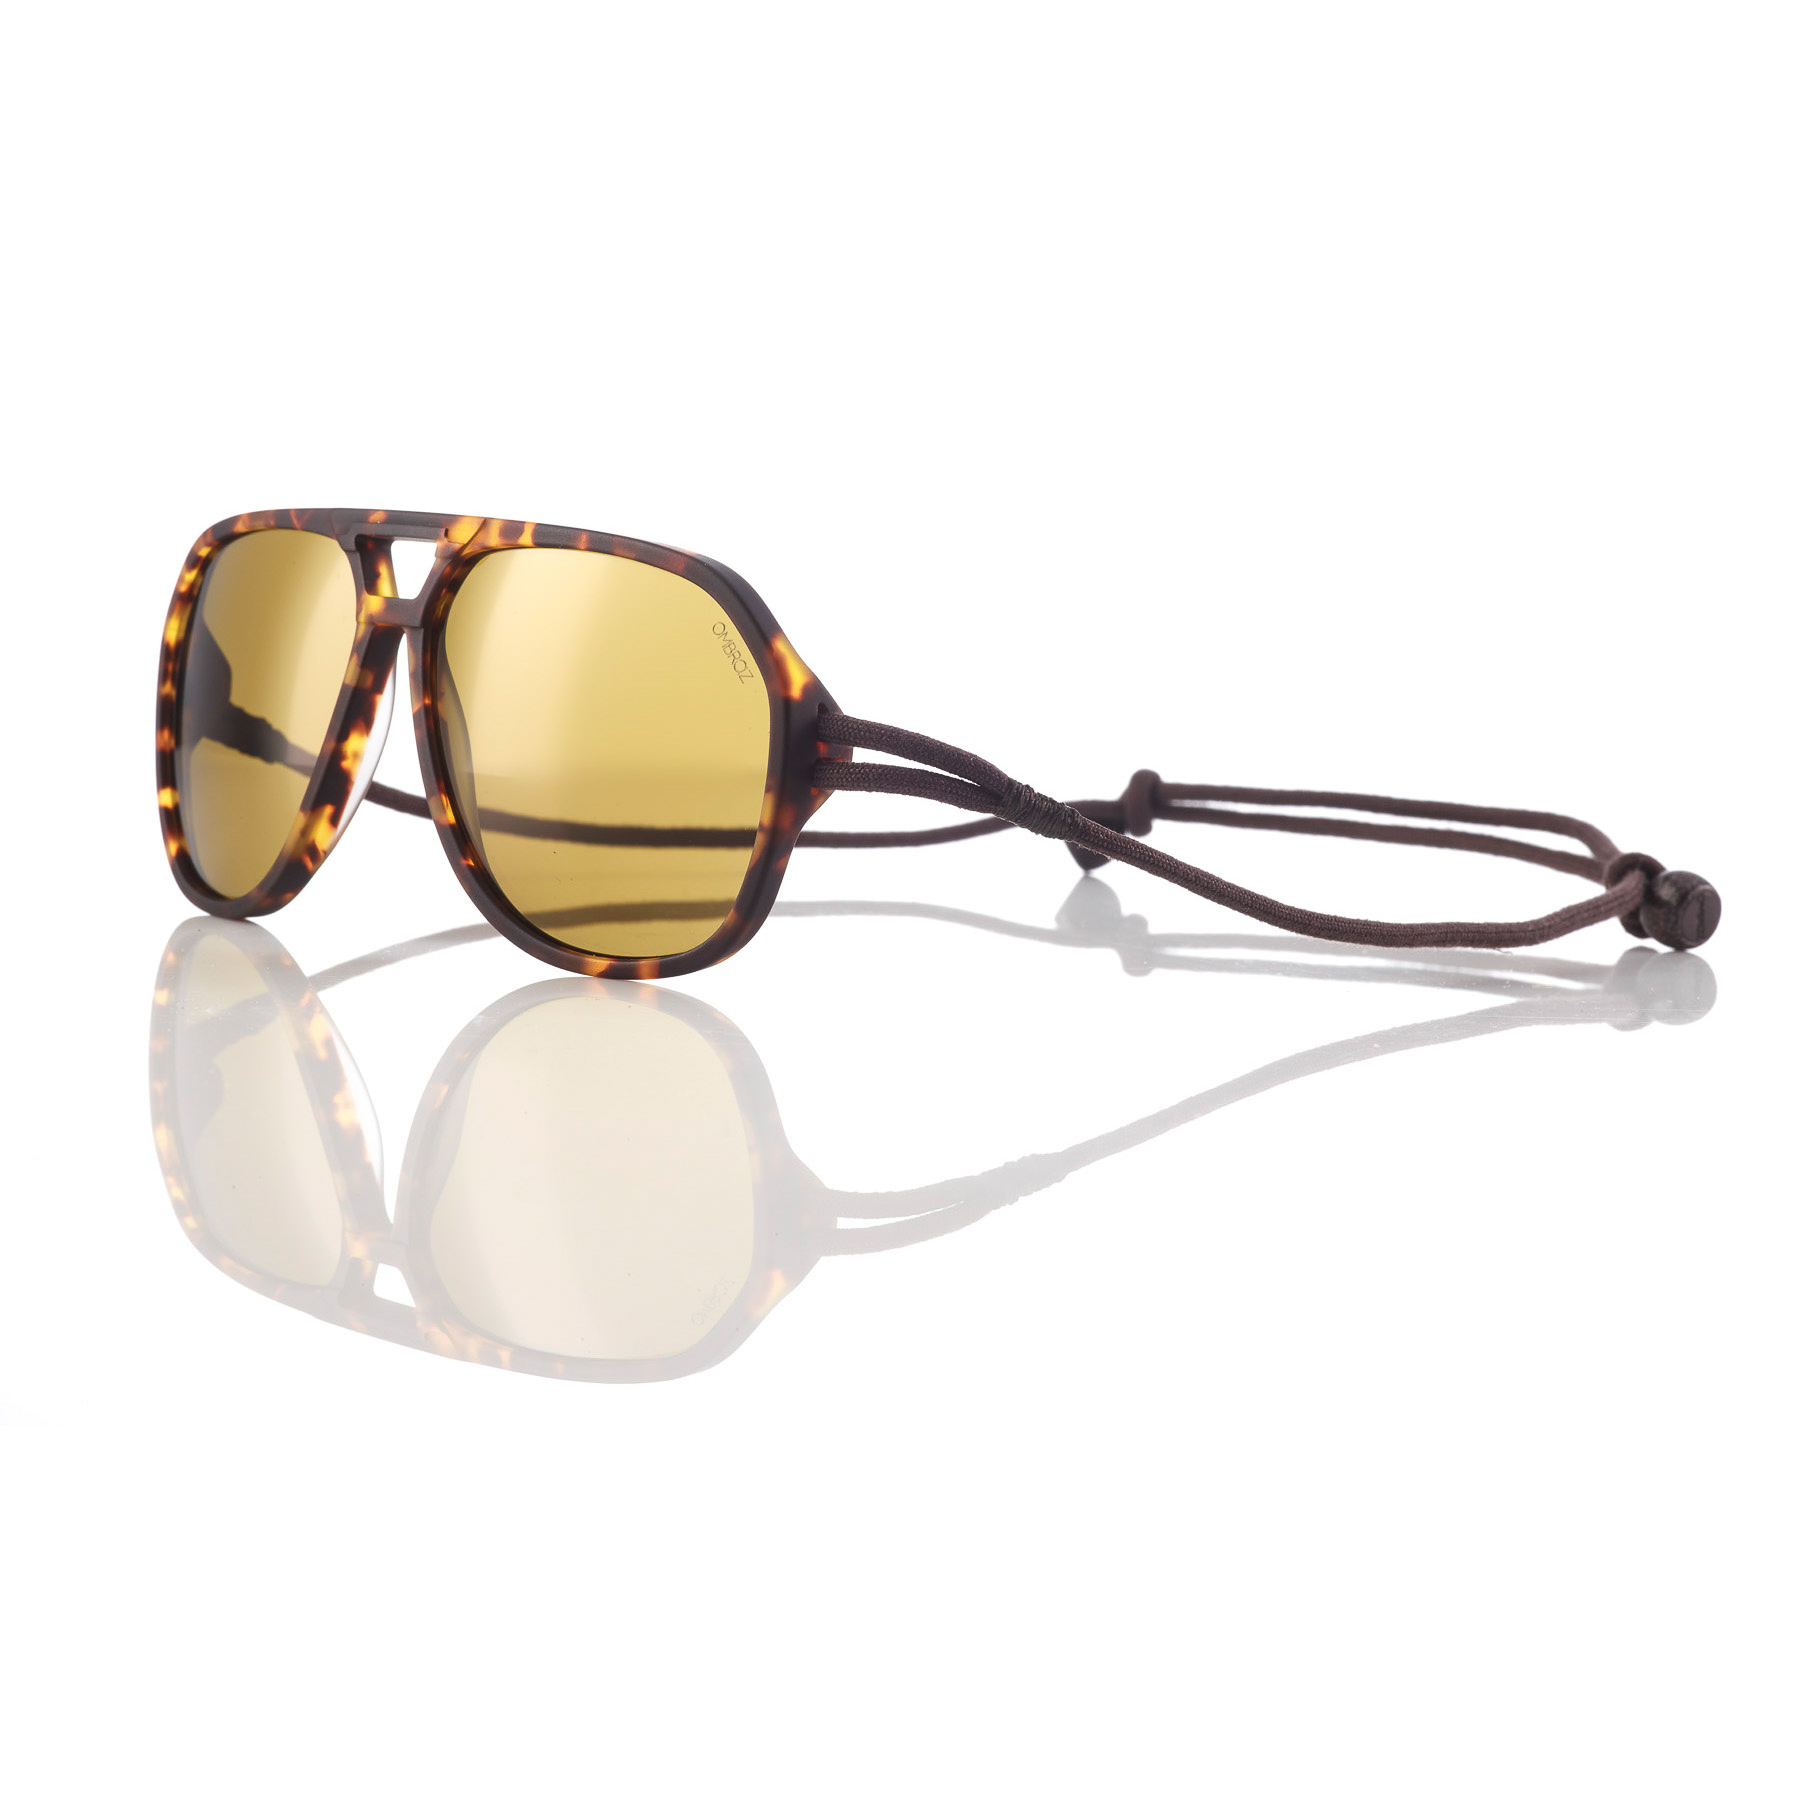 Ombraz Classic Armless Sunglasses - Tortoise/Polarized Yellow